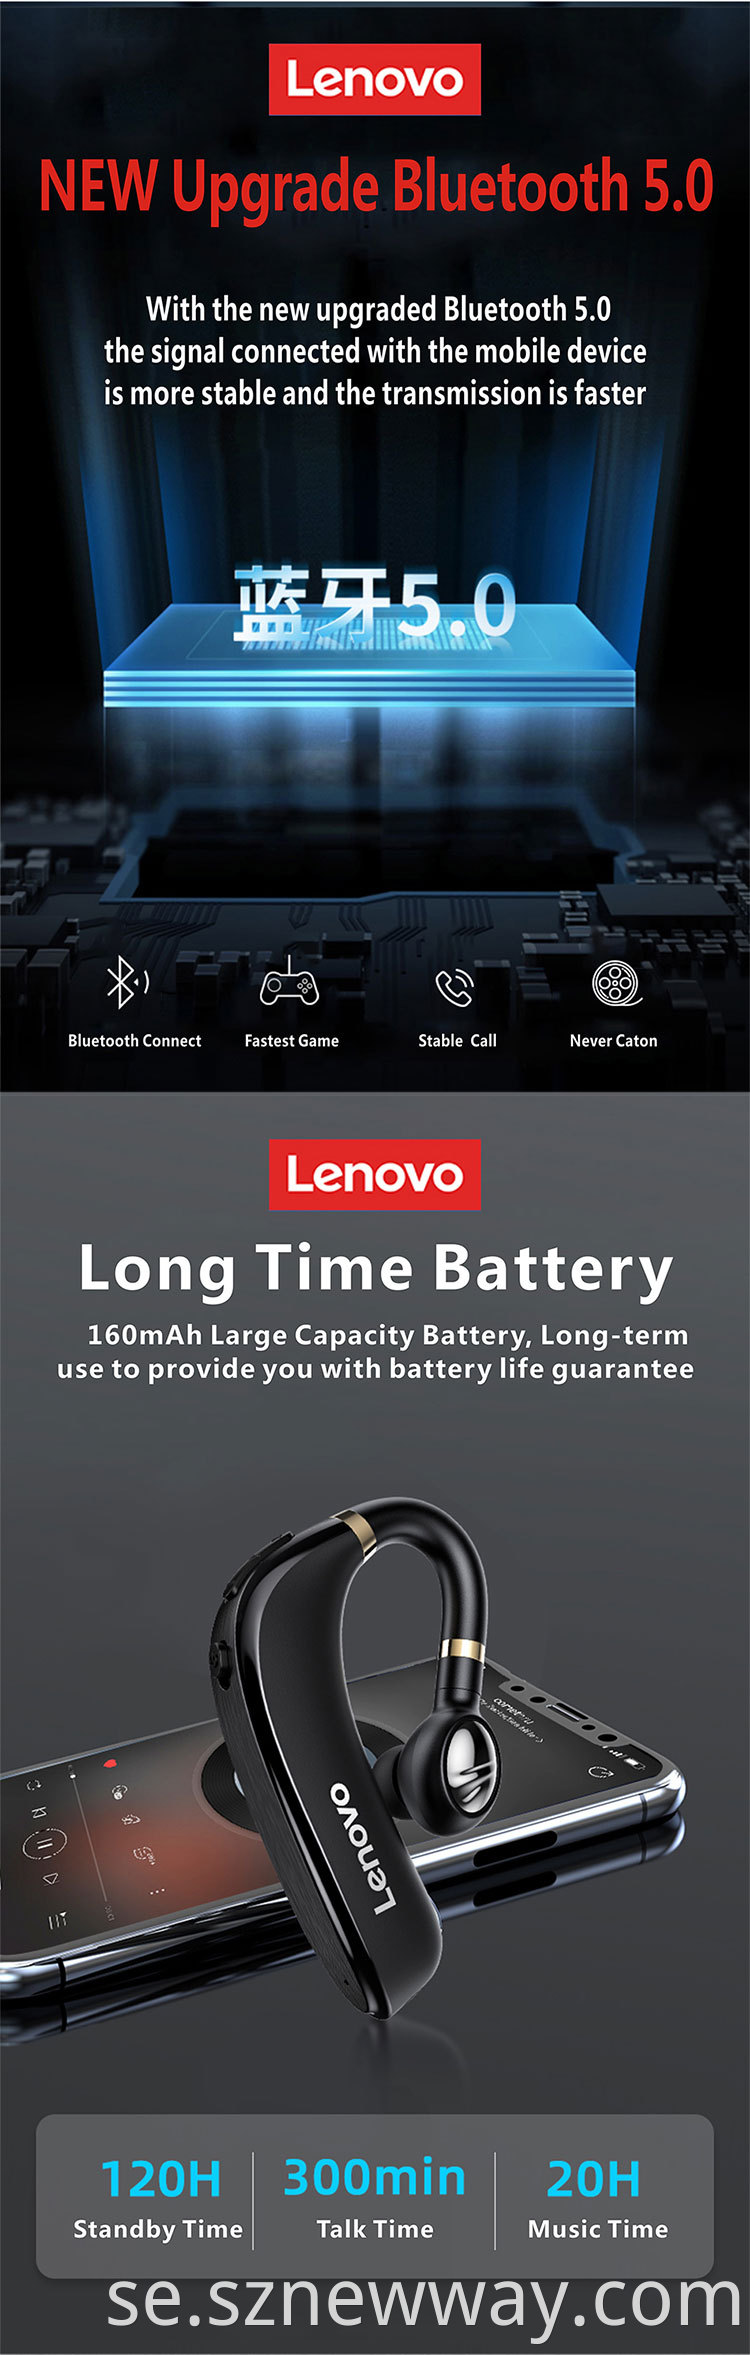 Lenovo Hx106 Headset